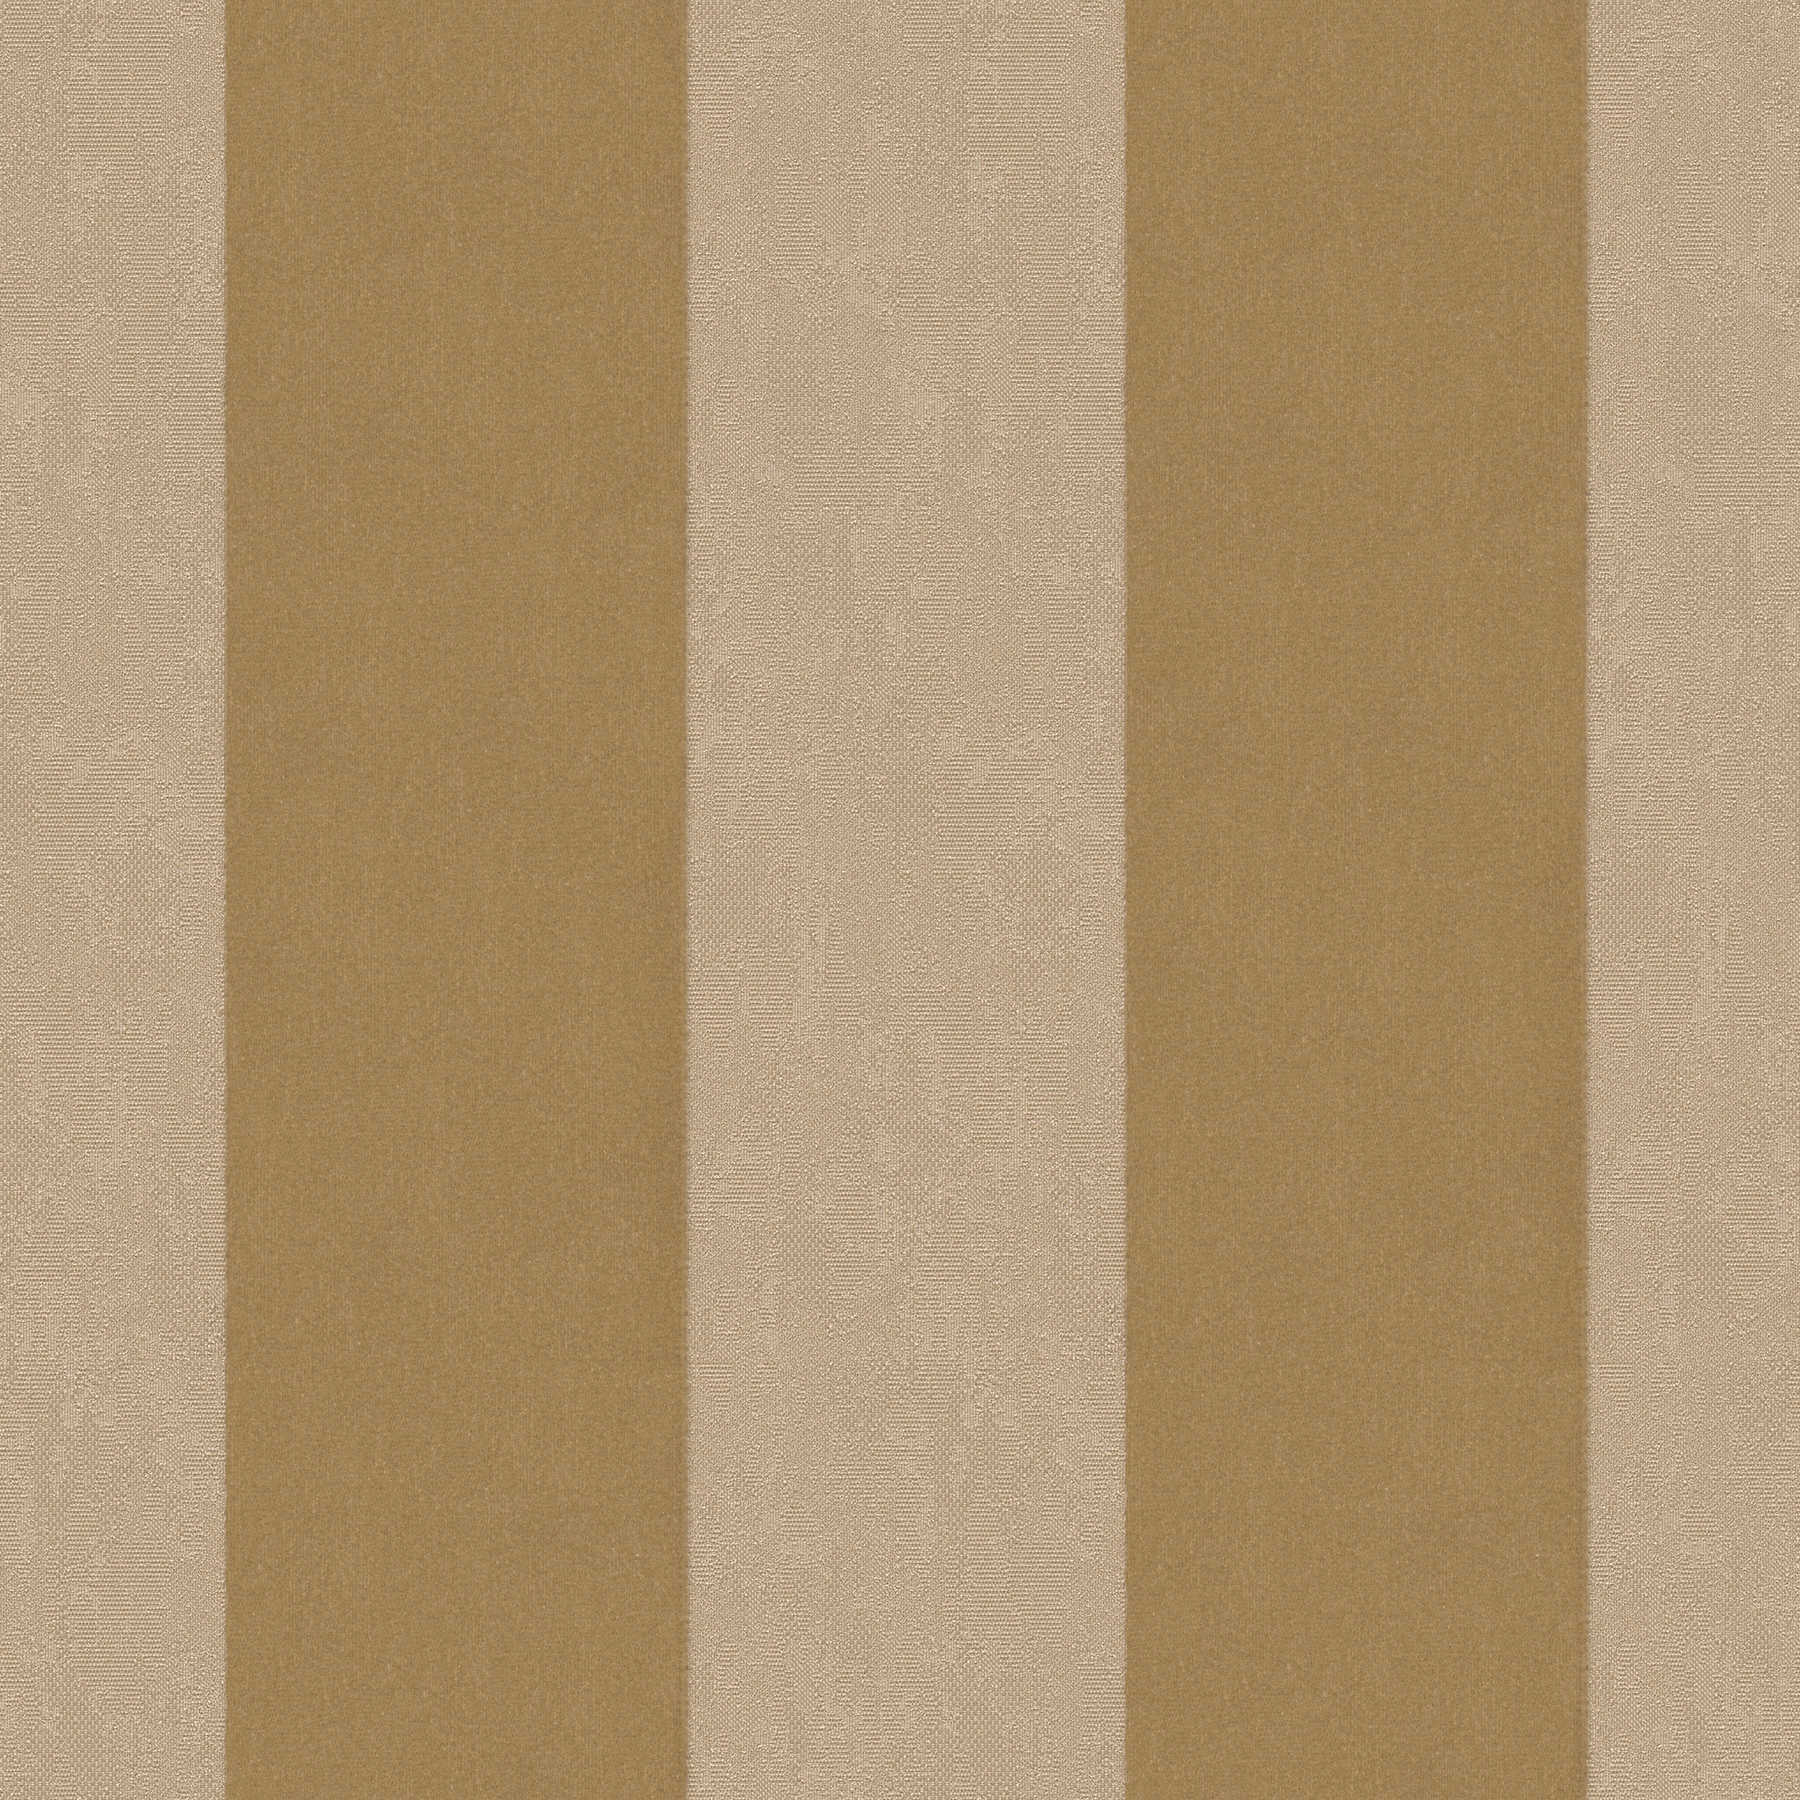         Non-woven wallpaper golden block stripes with textured pattern - metallic
    